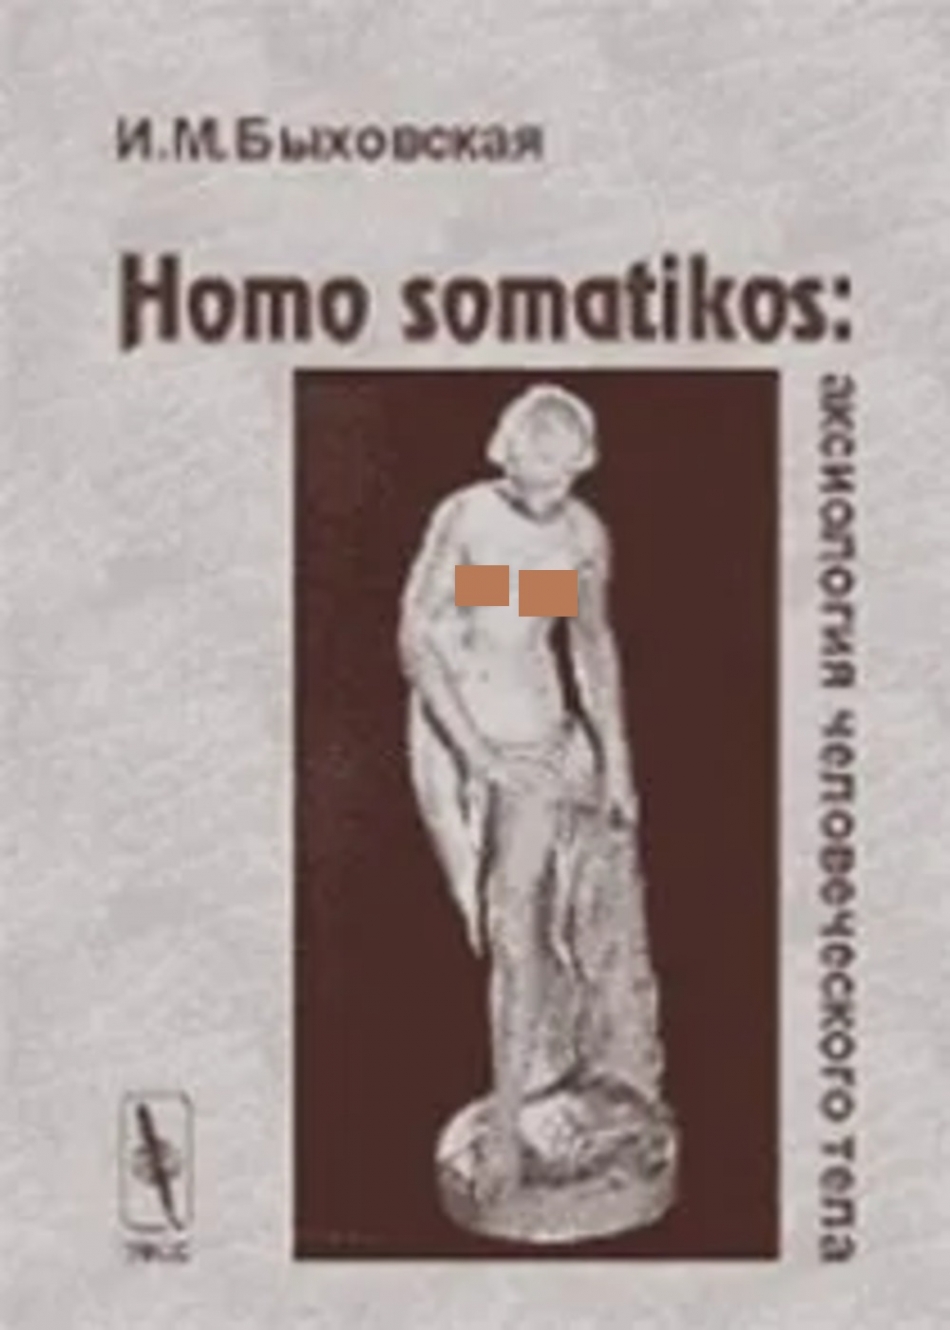  .. Homo somatikos:    